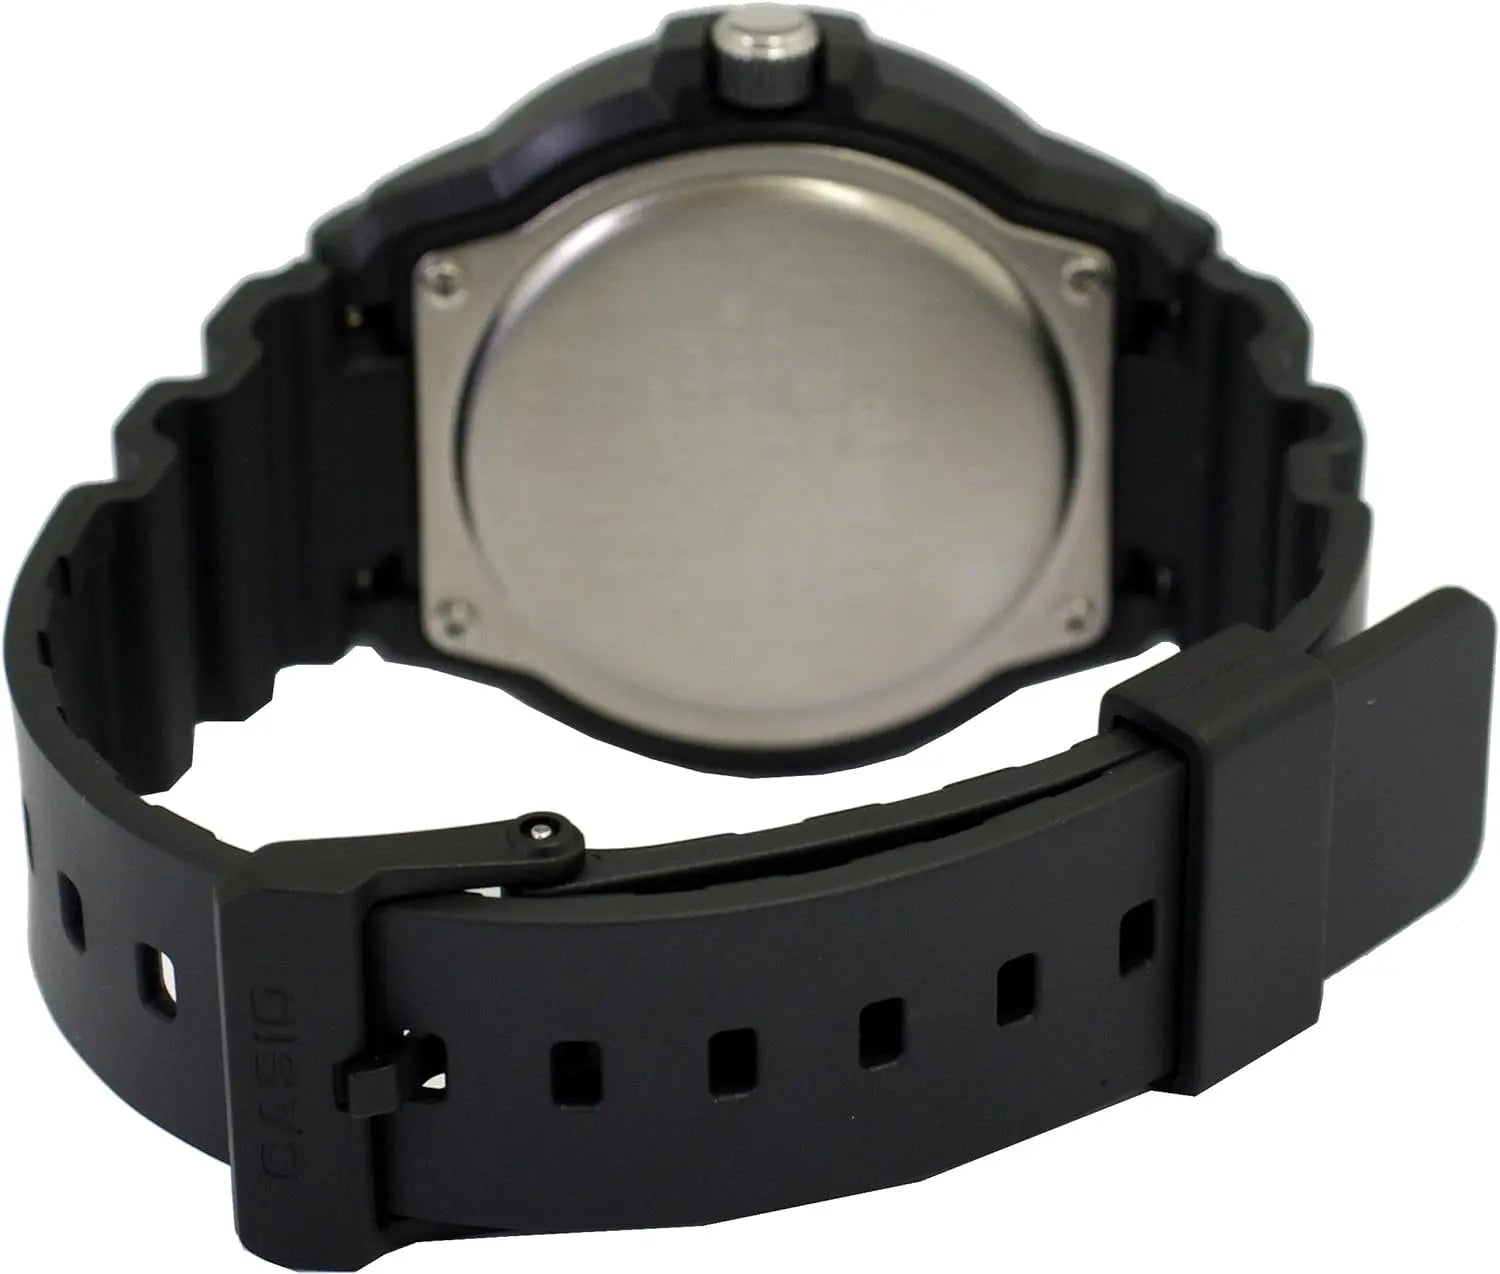 Casio MRW200H-1B Unisex Black Analog Watch with Black Band - Venus Trendy Fashion Online